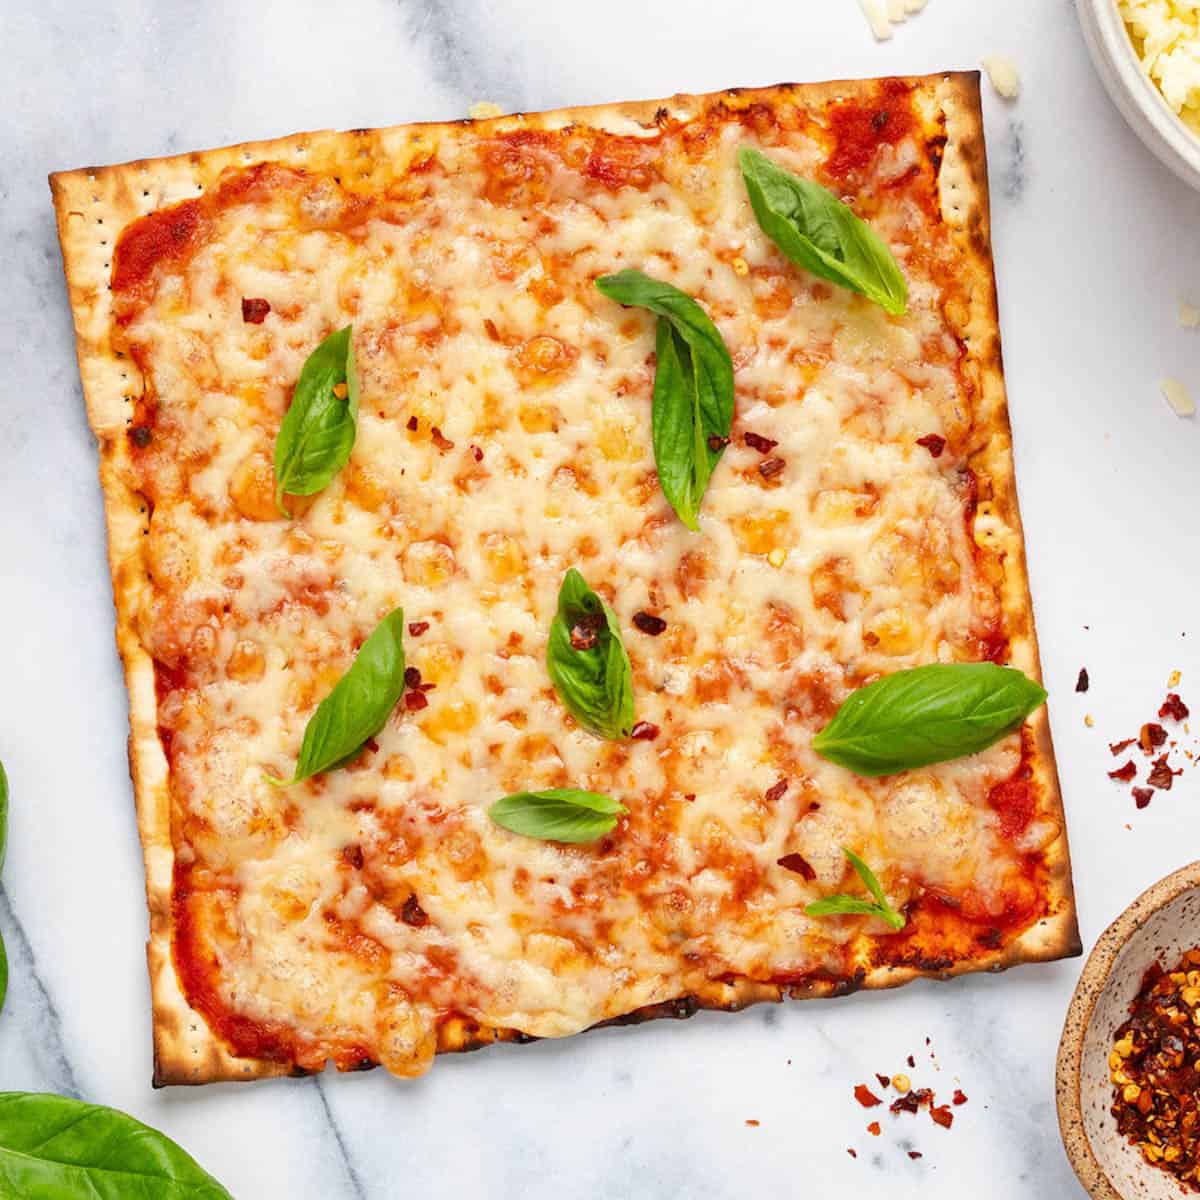 Matzo pizza topped with mozzarella and fresh basil.